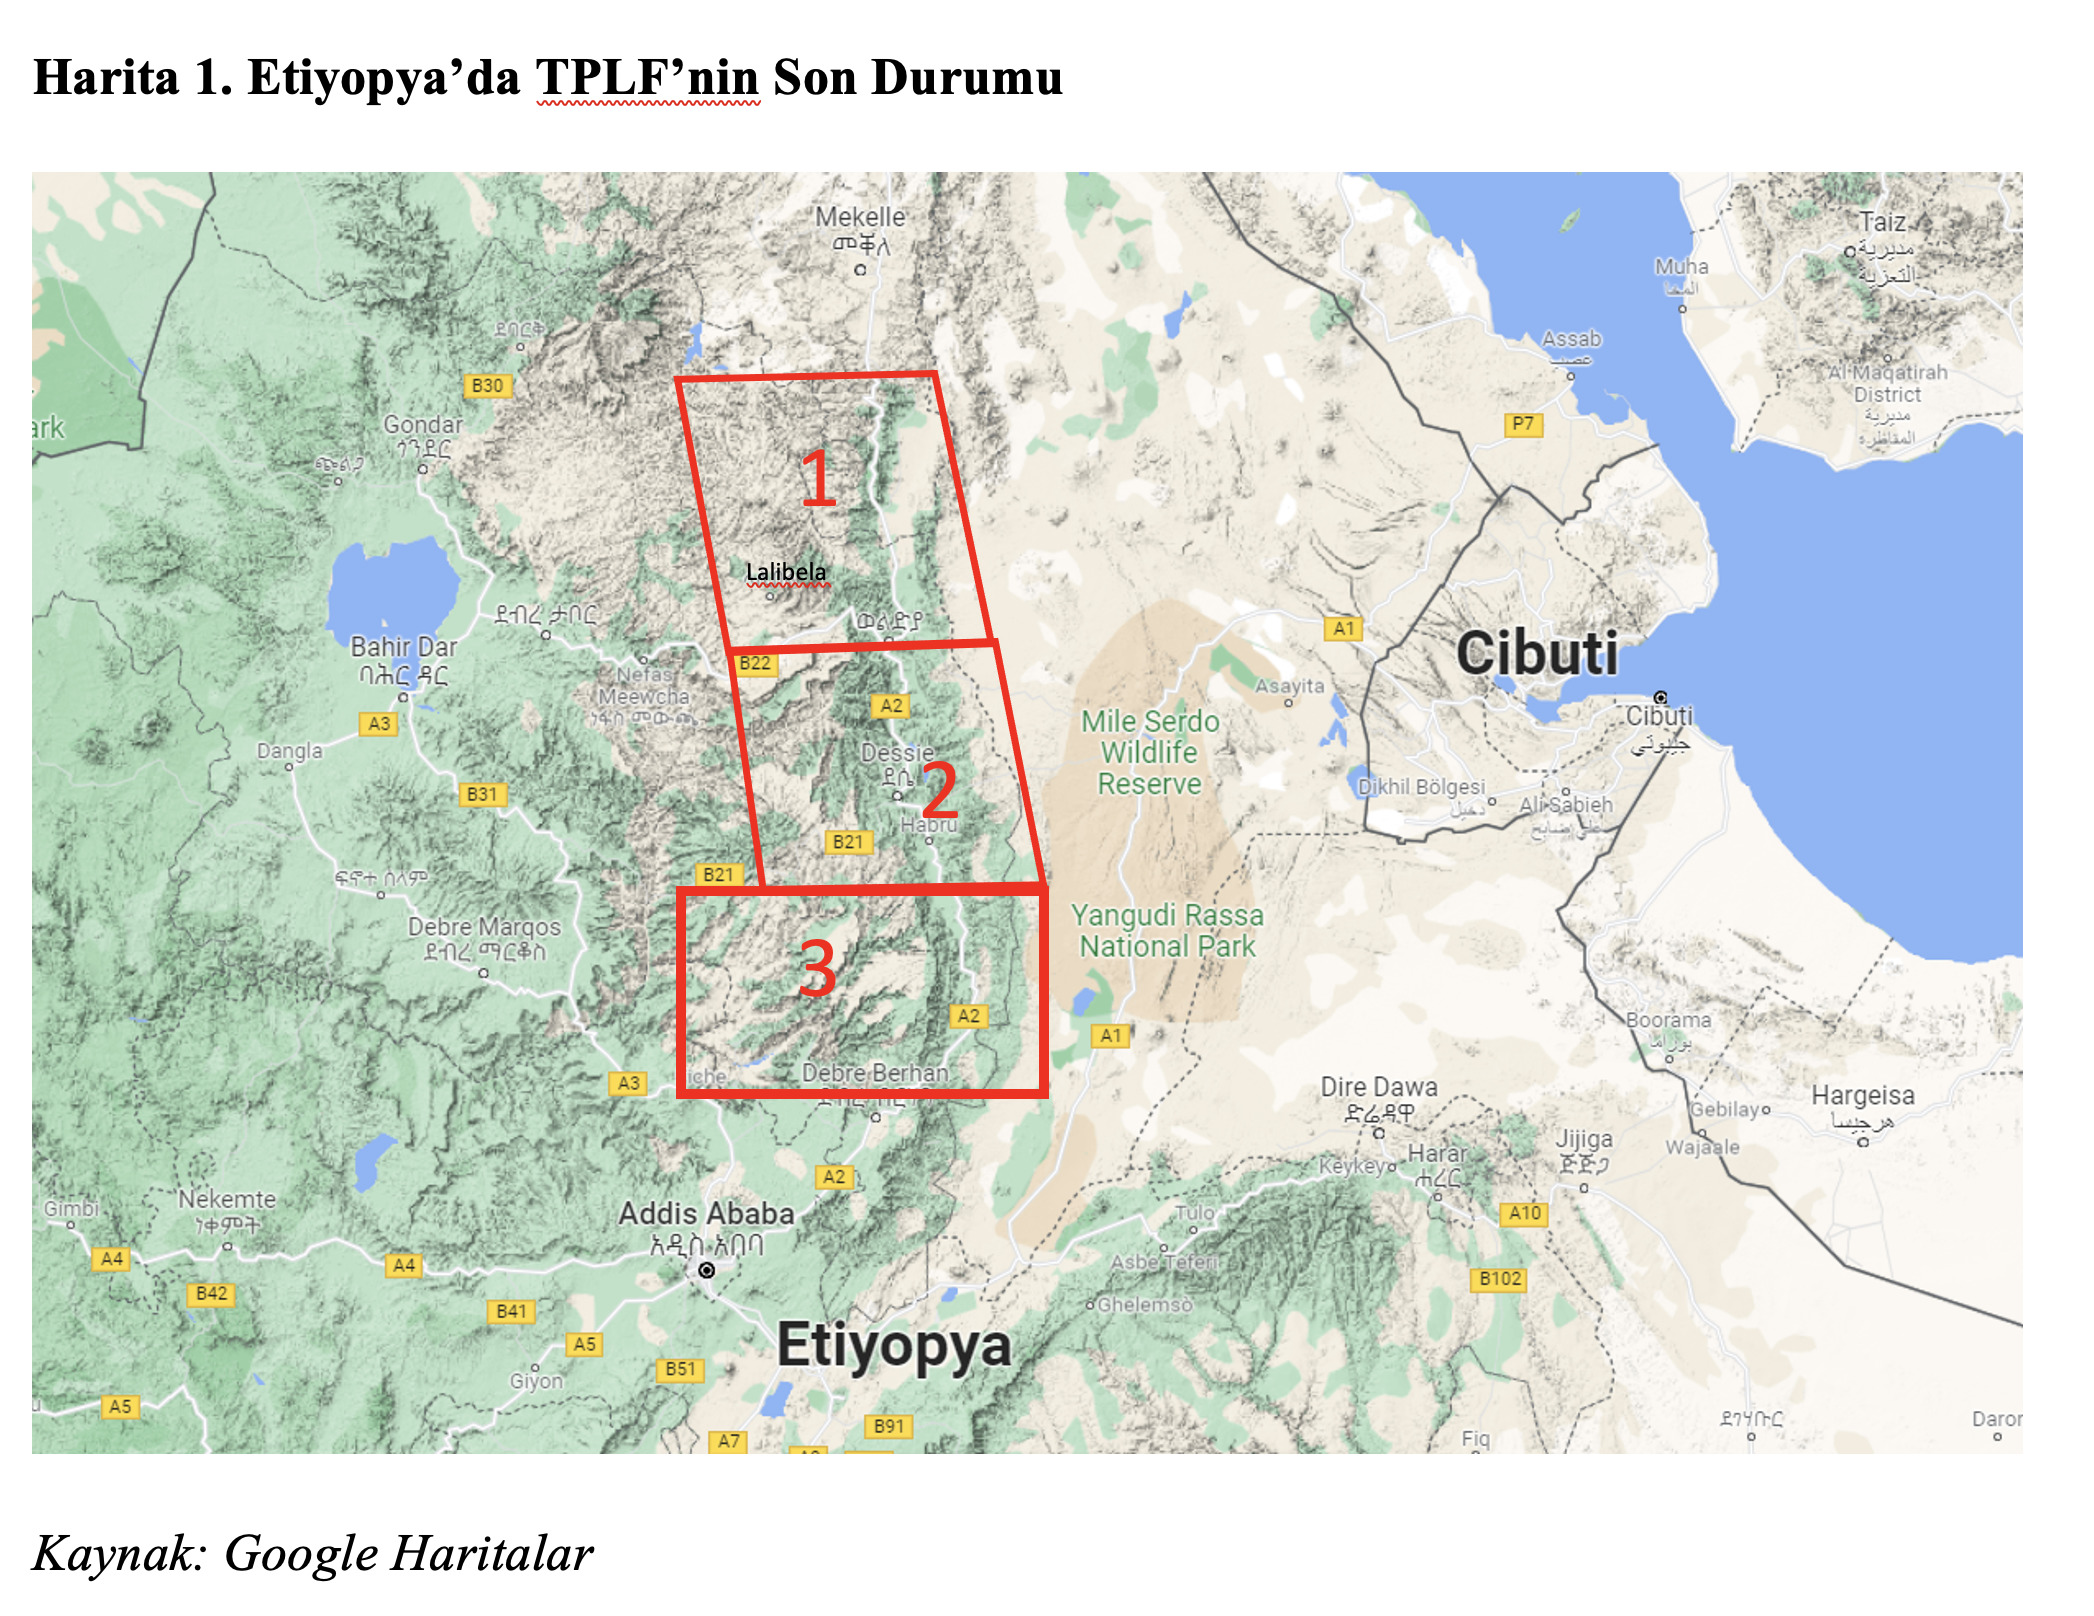 Harita 1. Etiyopya’da TPLF’nin Son Durumu